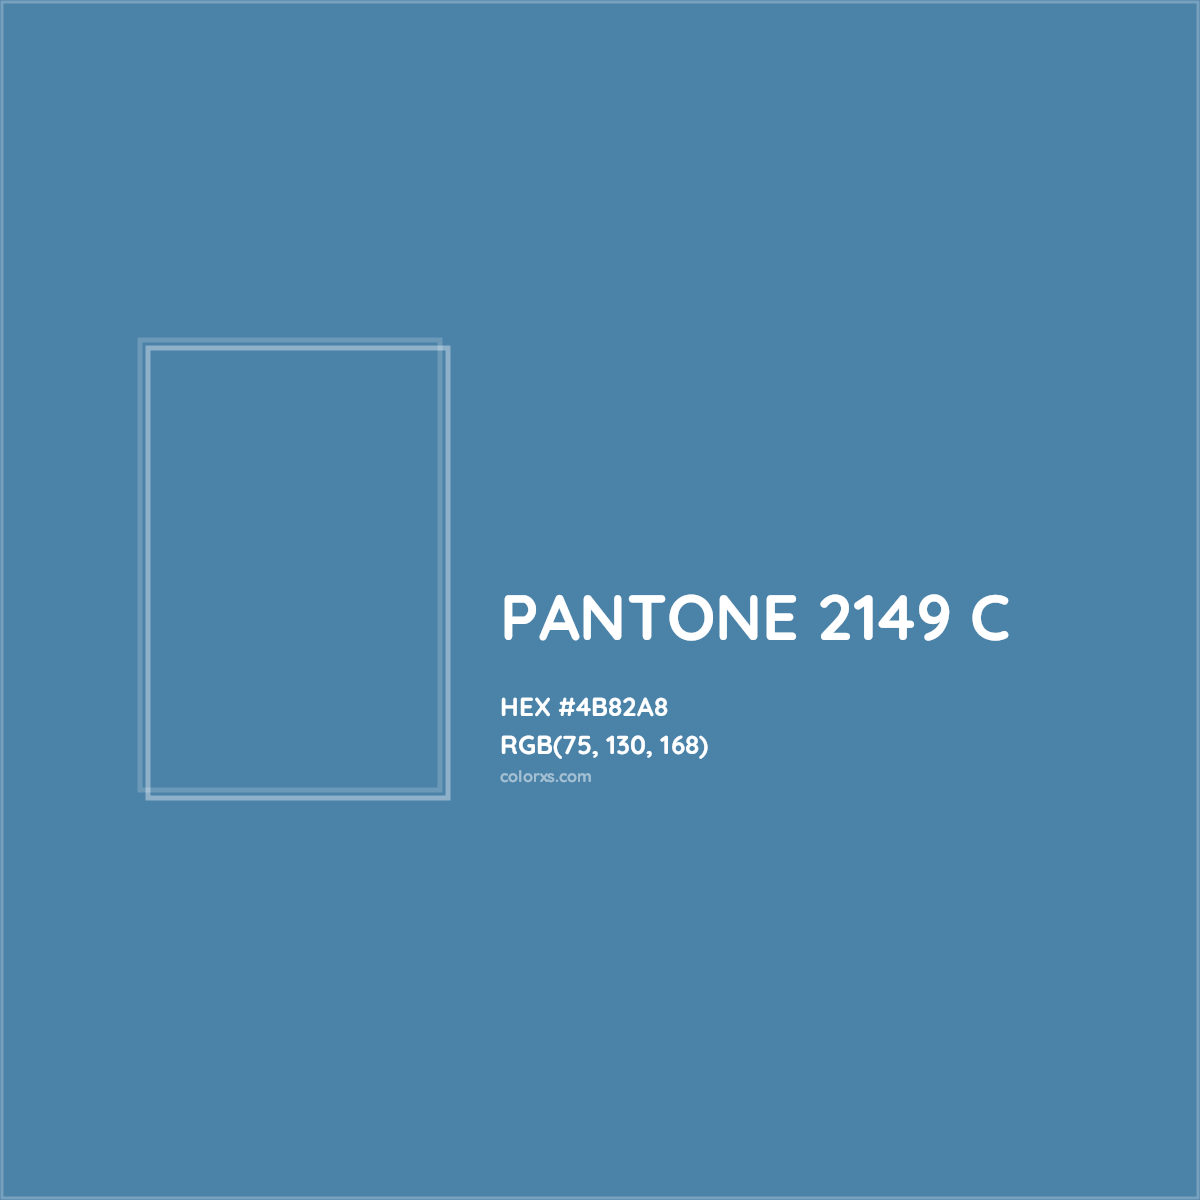 HEX #4B82A8 PANTONE 2149 C CMS Pantone PMS - Color Code